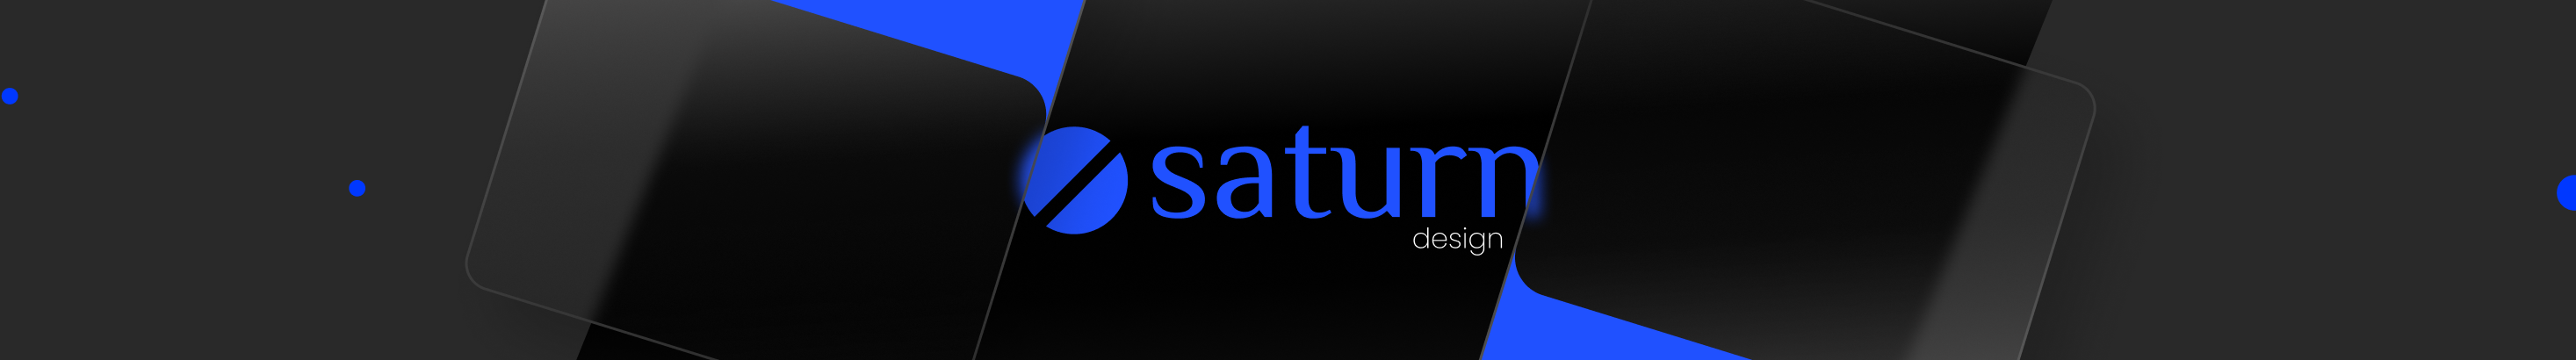 Saturn Design's profile banner